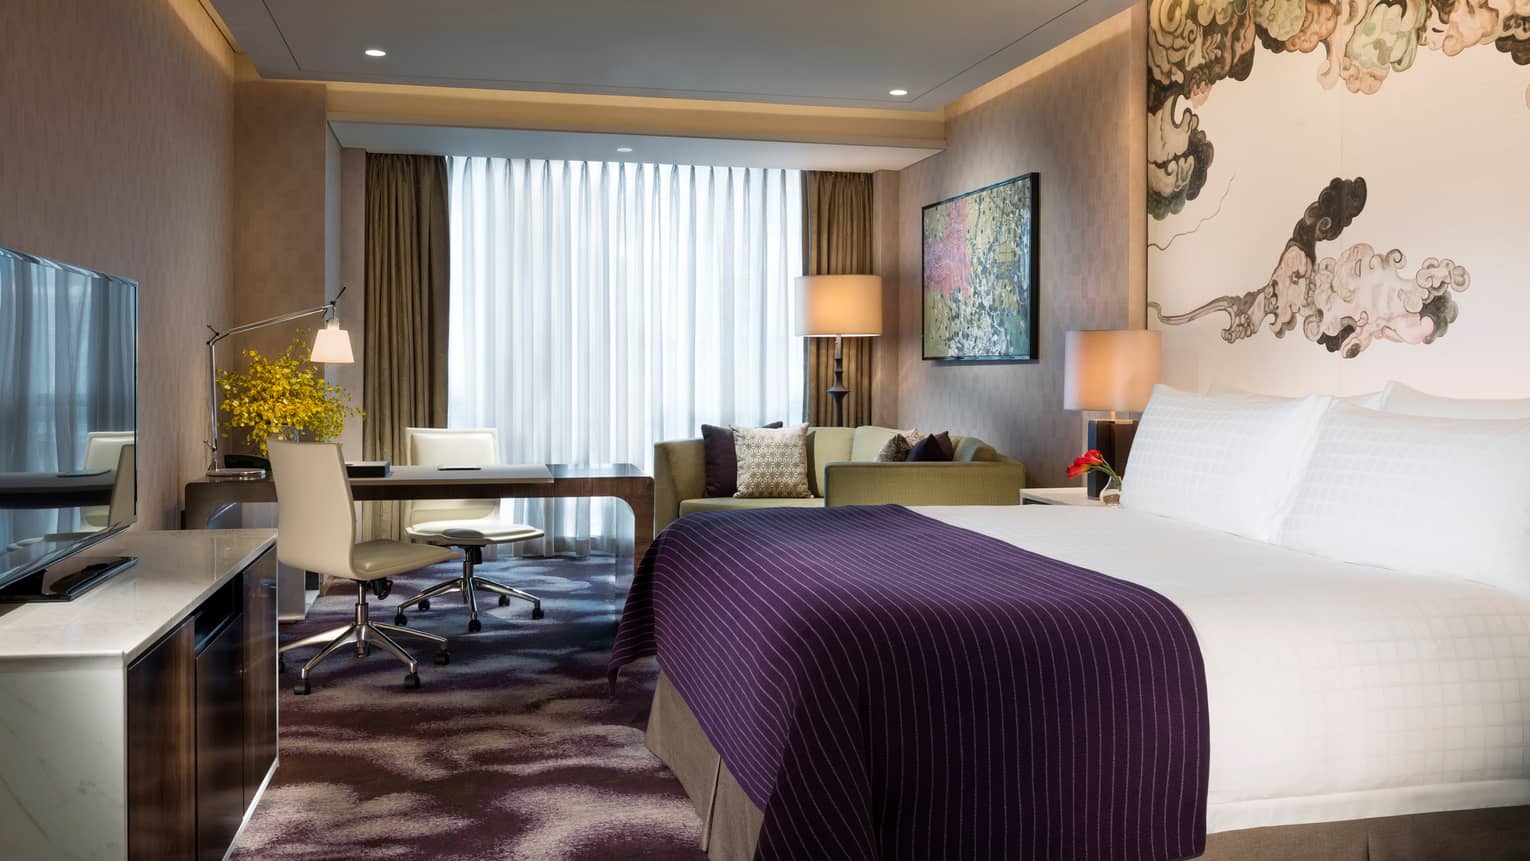 Premier Room hotel bed with indigo blanket, dresser and TV, desk by window